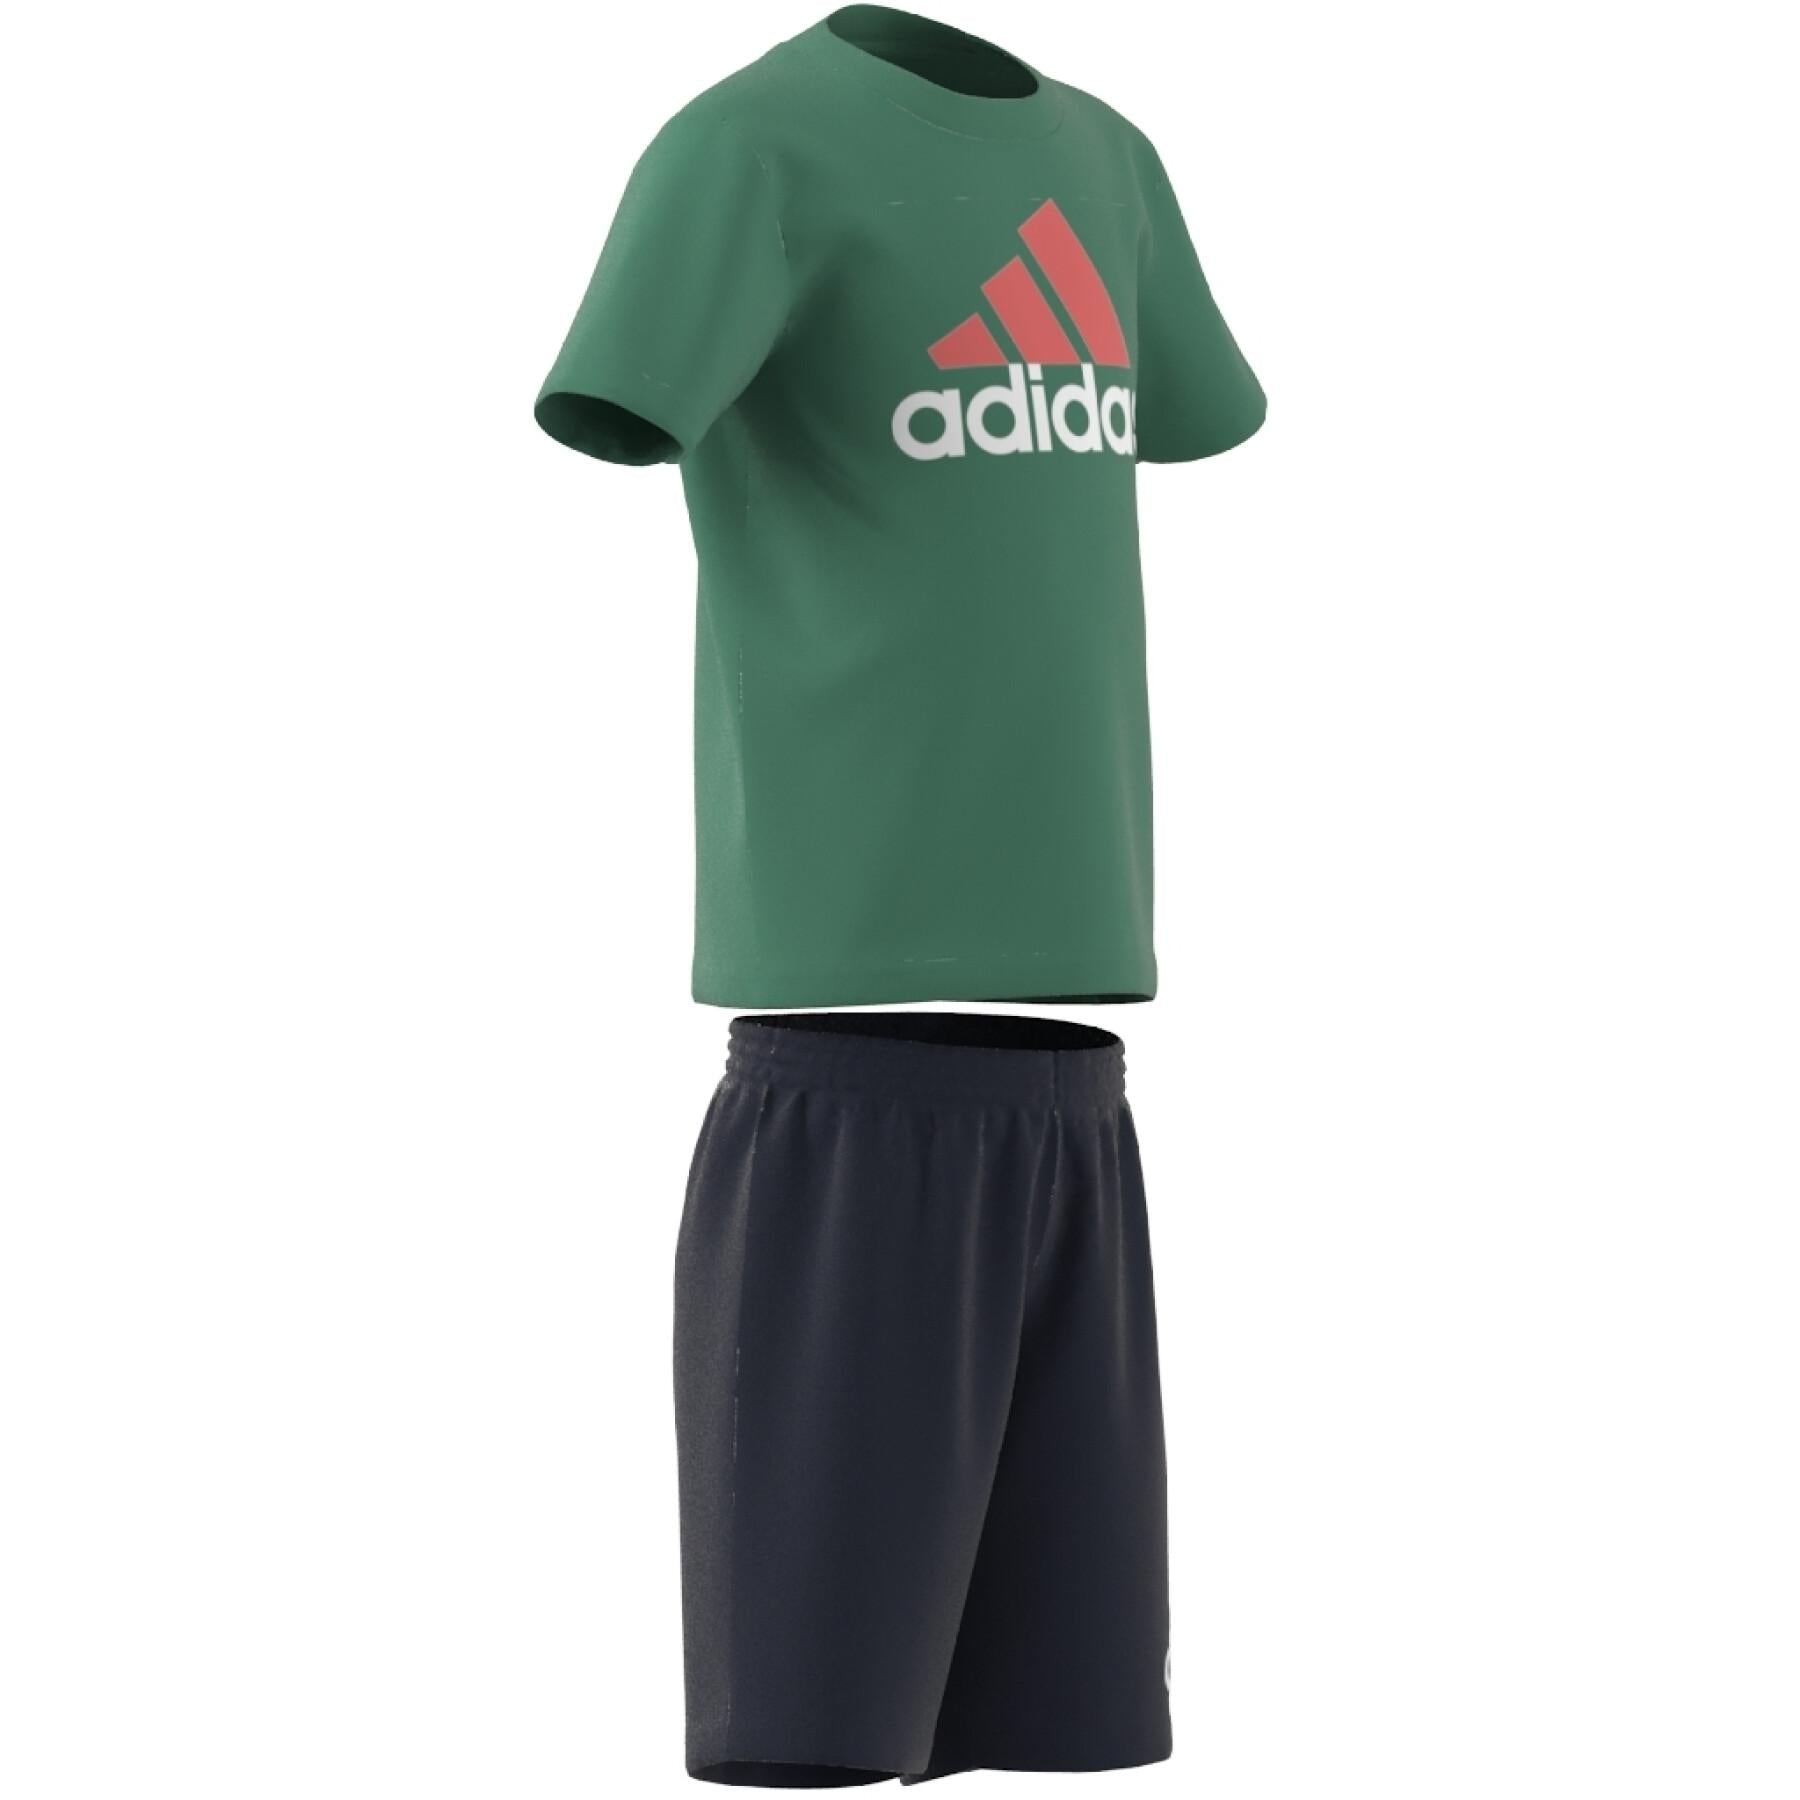 AA-O19 (Adidas kids big logo tee and shorts set green/orange/black) 32293070 ADIDAS